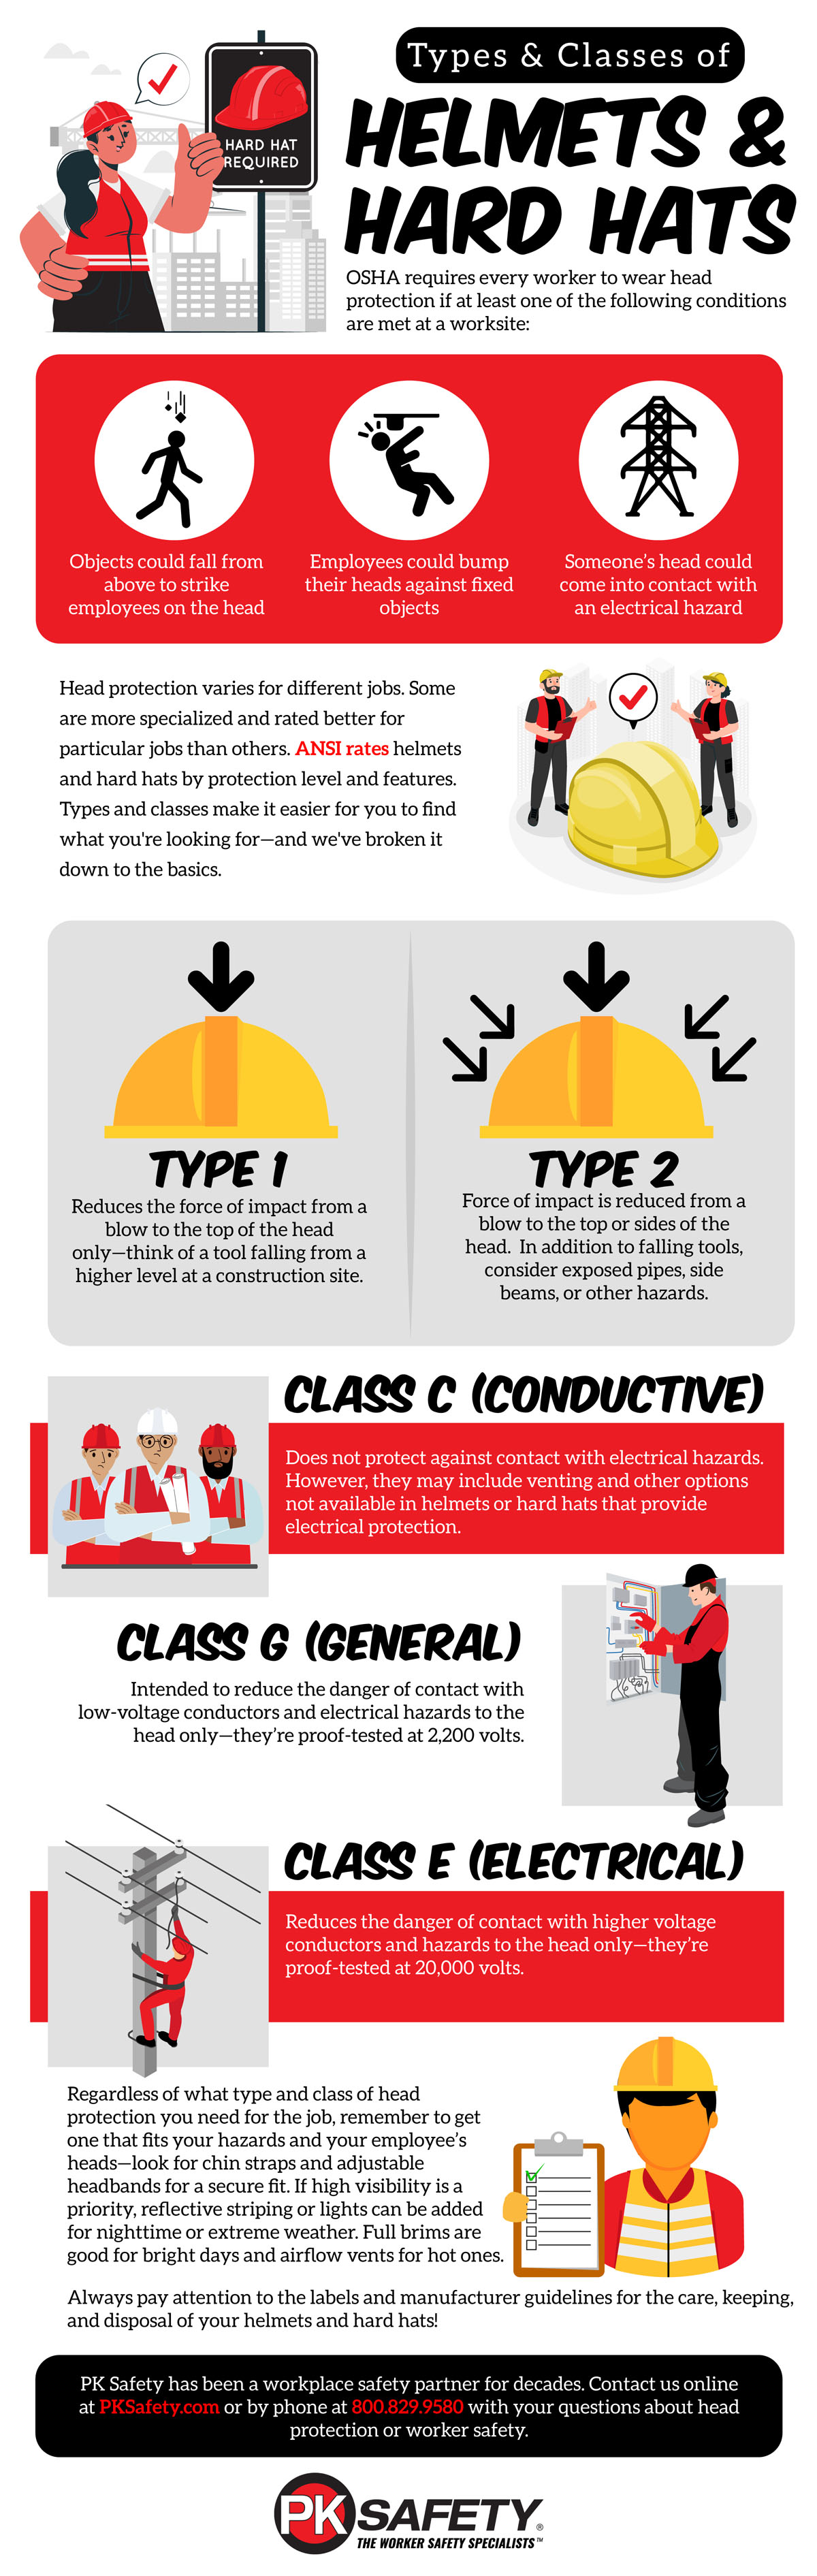 Types & Classes of Helmets & Hard Hats